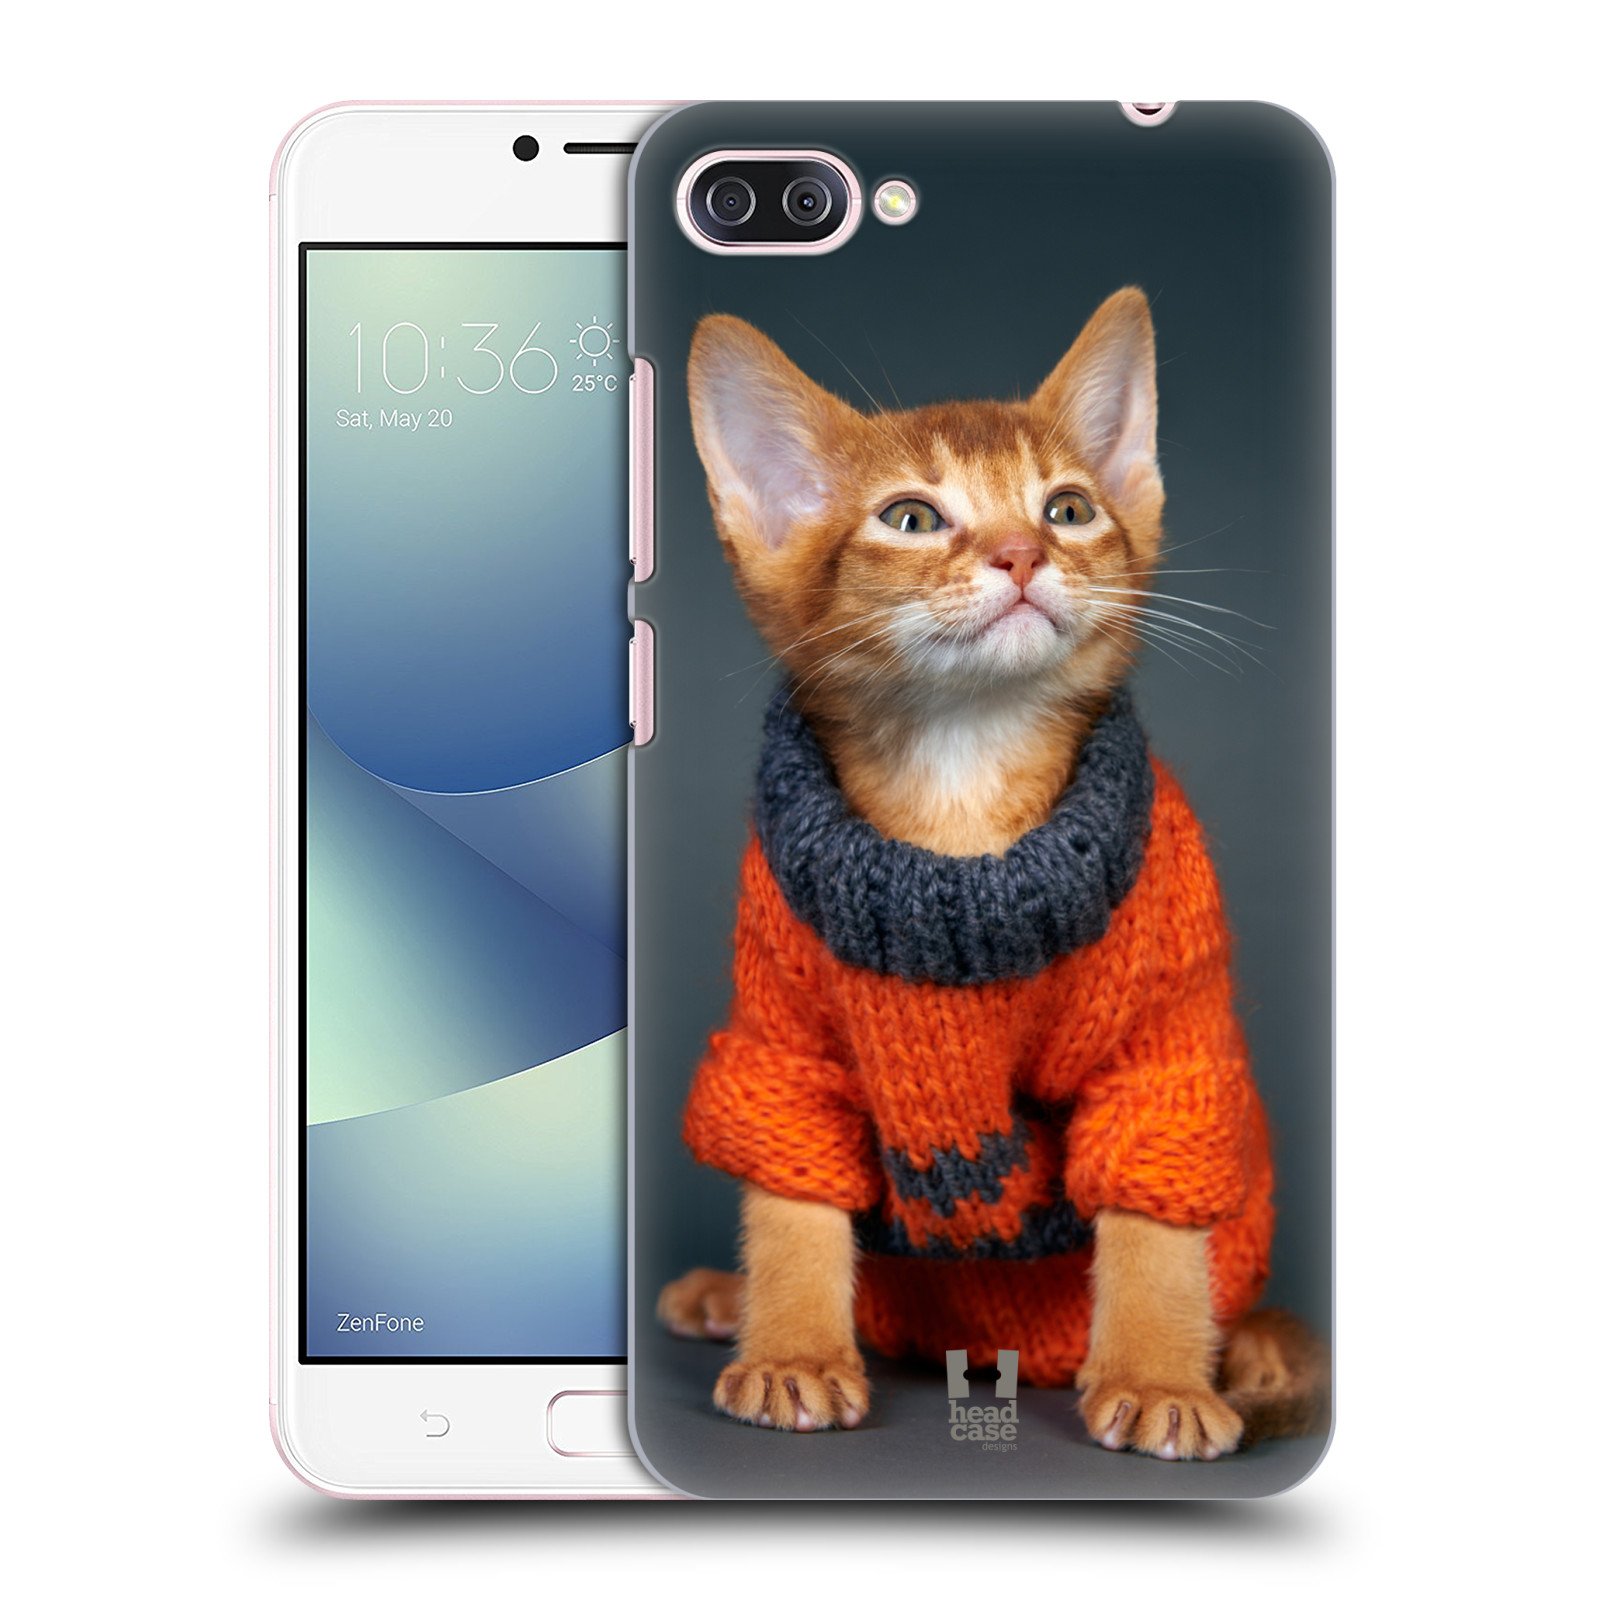 HEAD CASE plastový obal na mobil Asus Zenfone 4 MAX ZC554KL vzor Legrační zvířátka kočička v oranžovém svetru